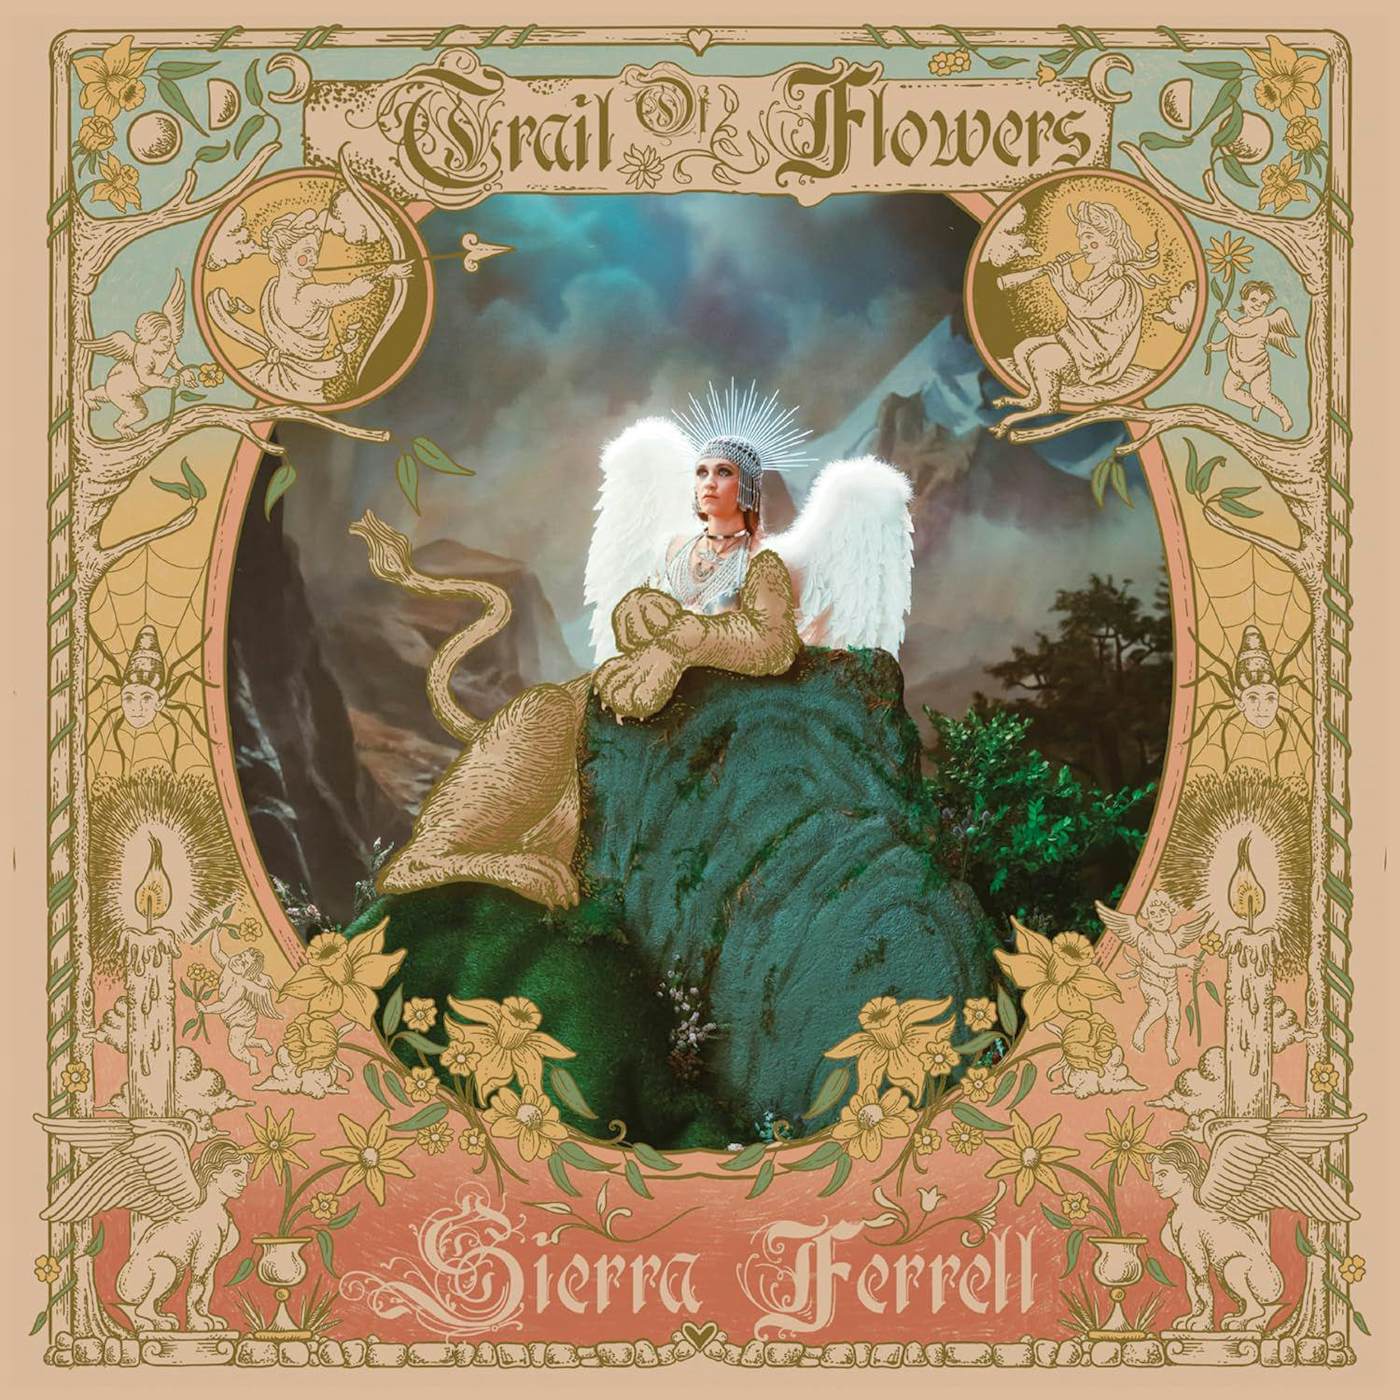 Sierra Ferrell Trail Of Flowers Vinyl Record